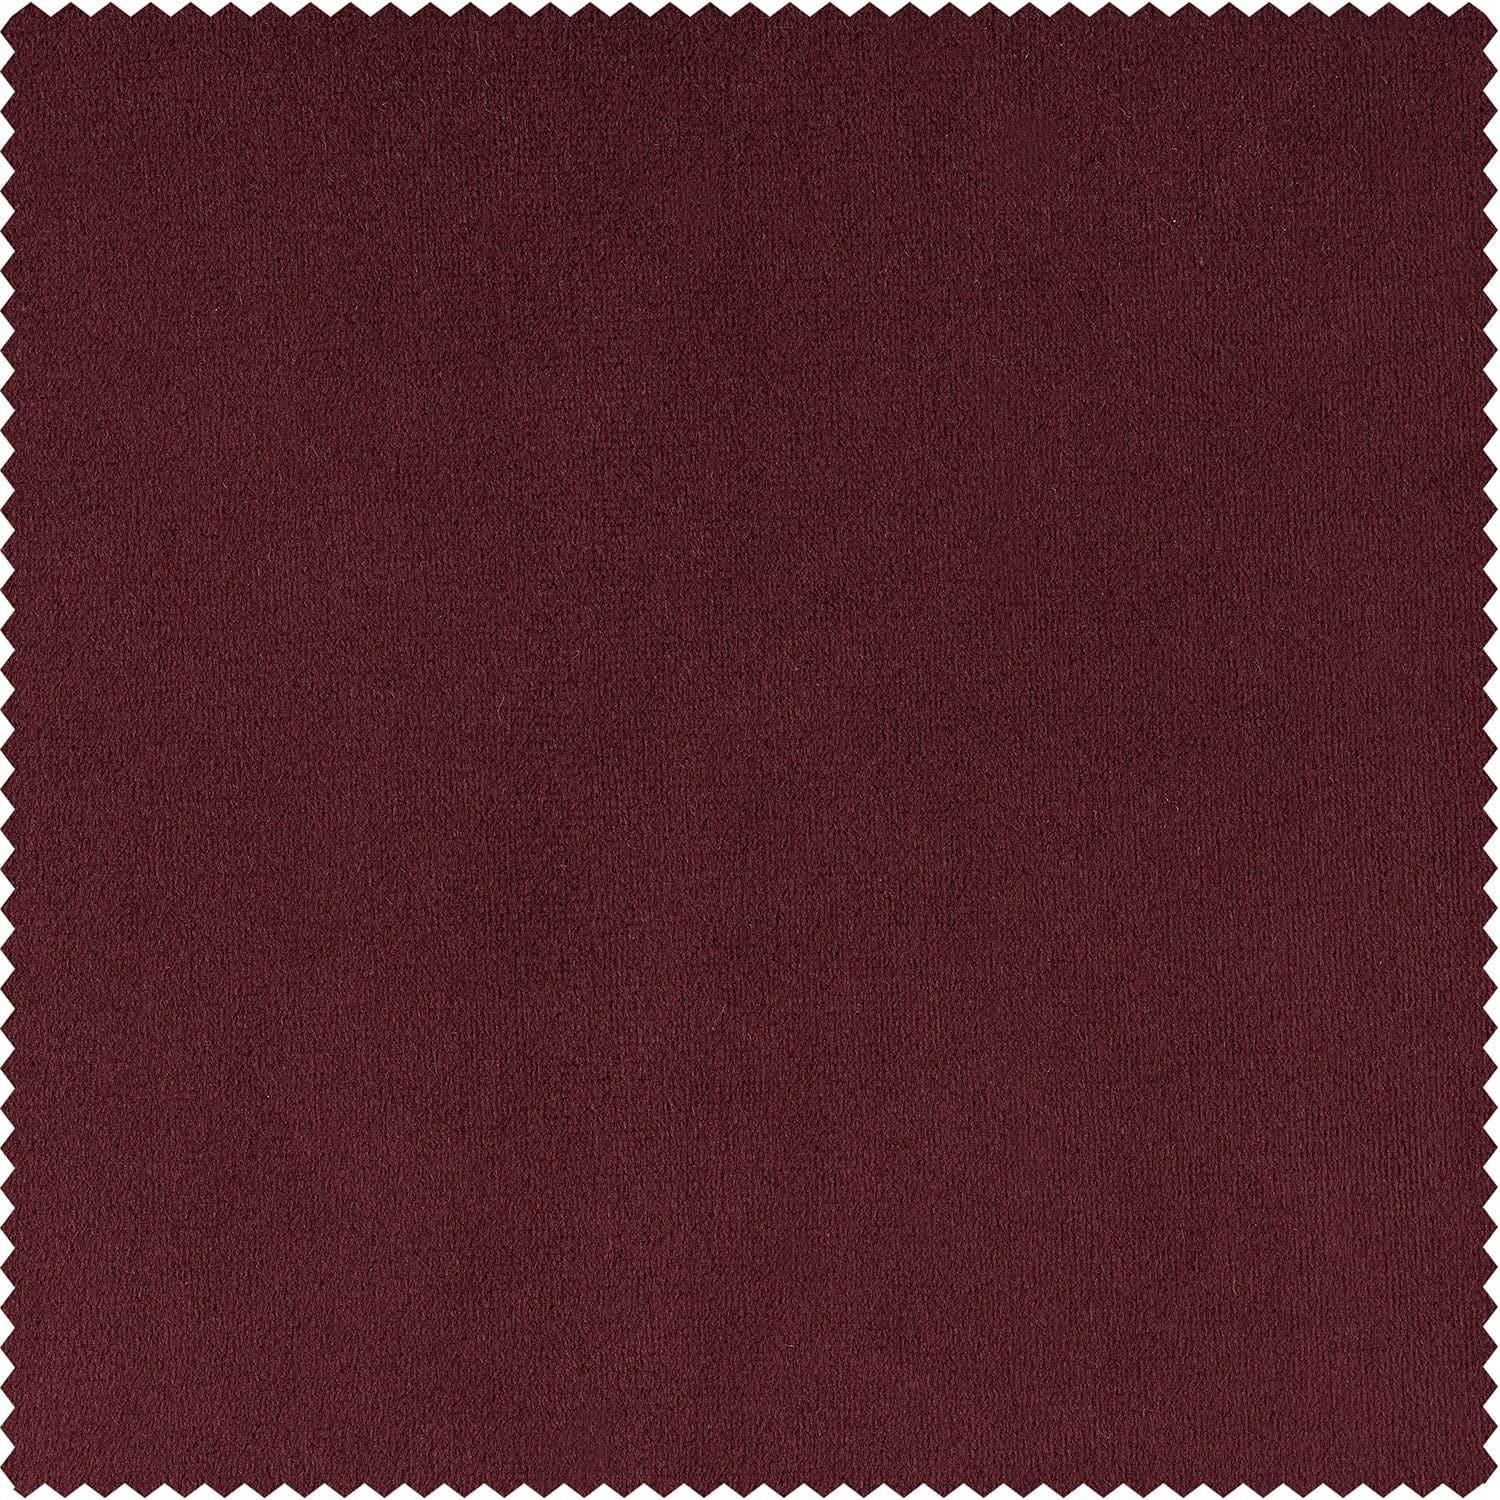 Burgundy Signature Velvet Cushion Covers - Pair